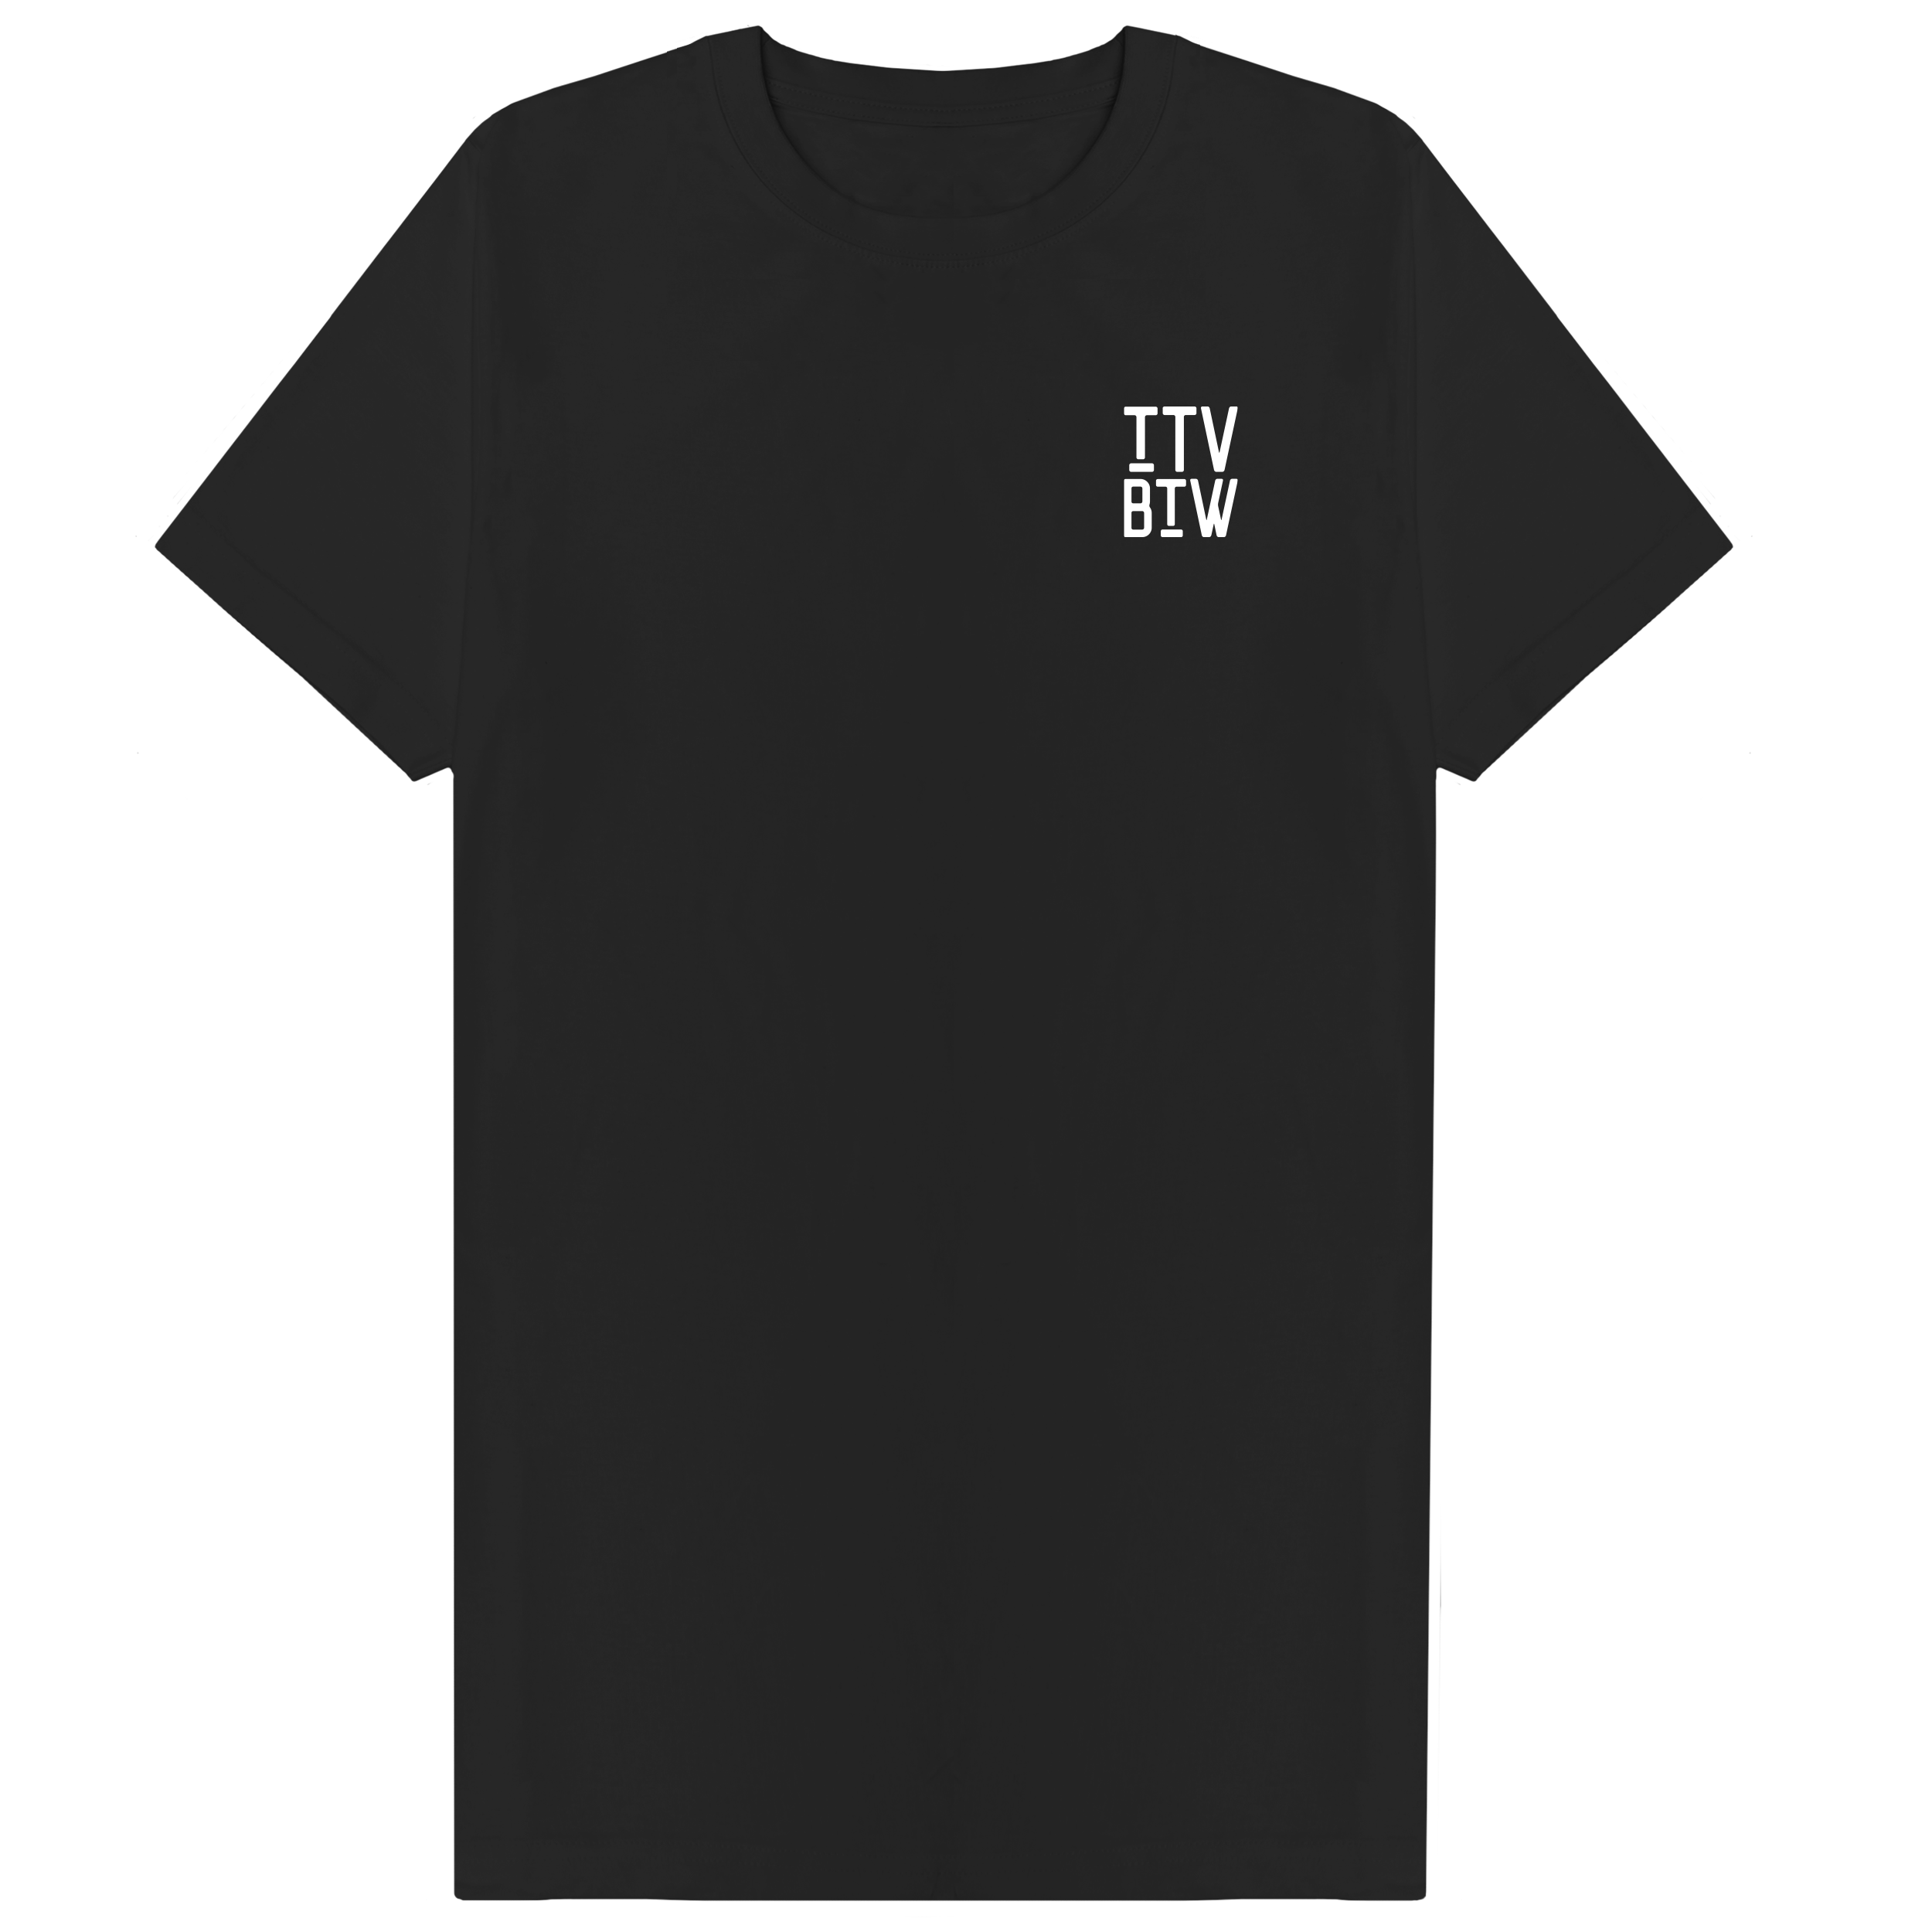 TTVbtw T-Shirt